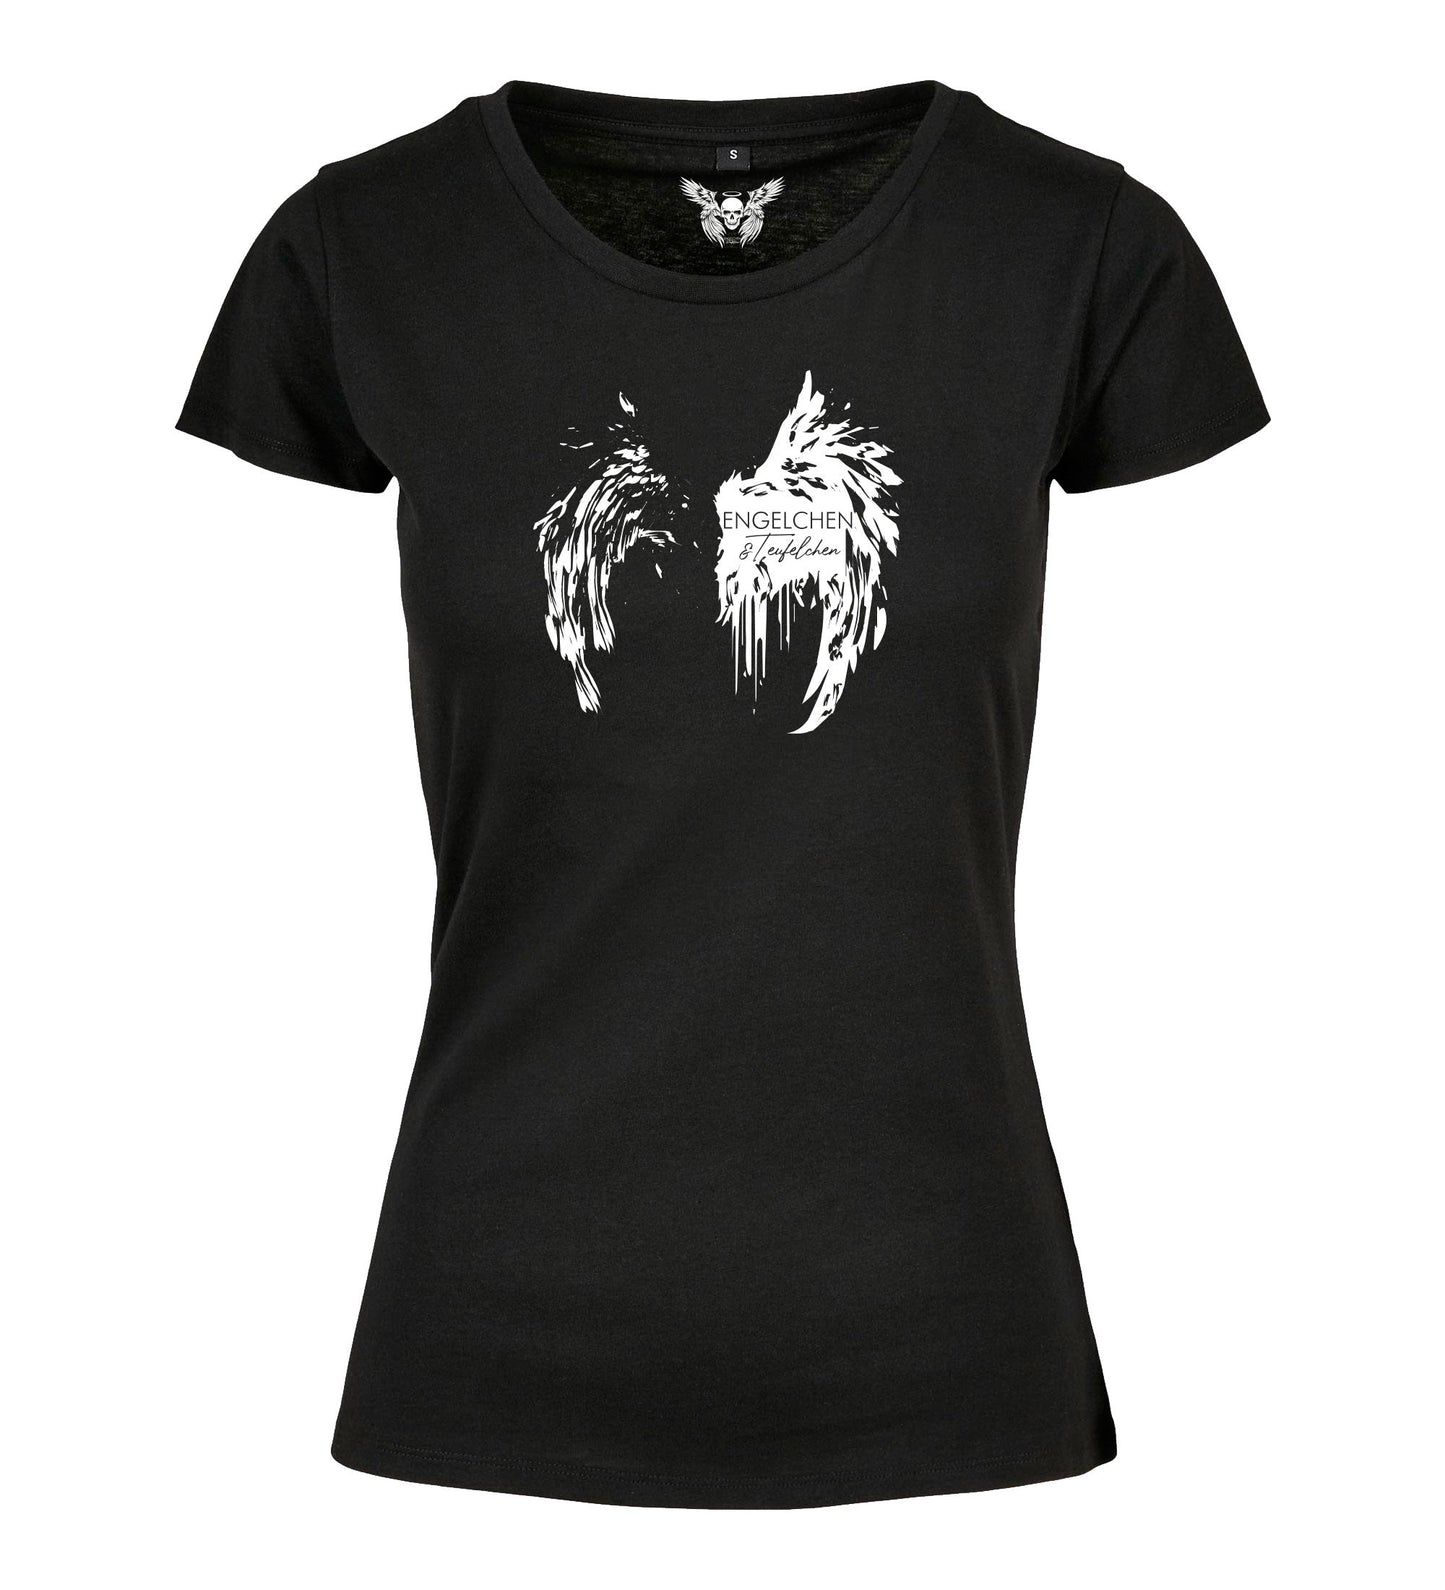 Damen T-Shirt: Engelchen & Teufelchen Flügel